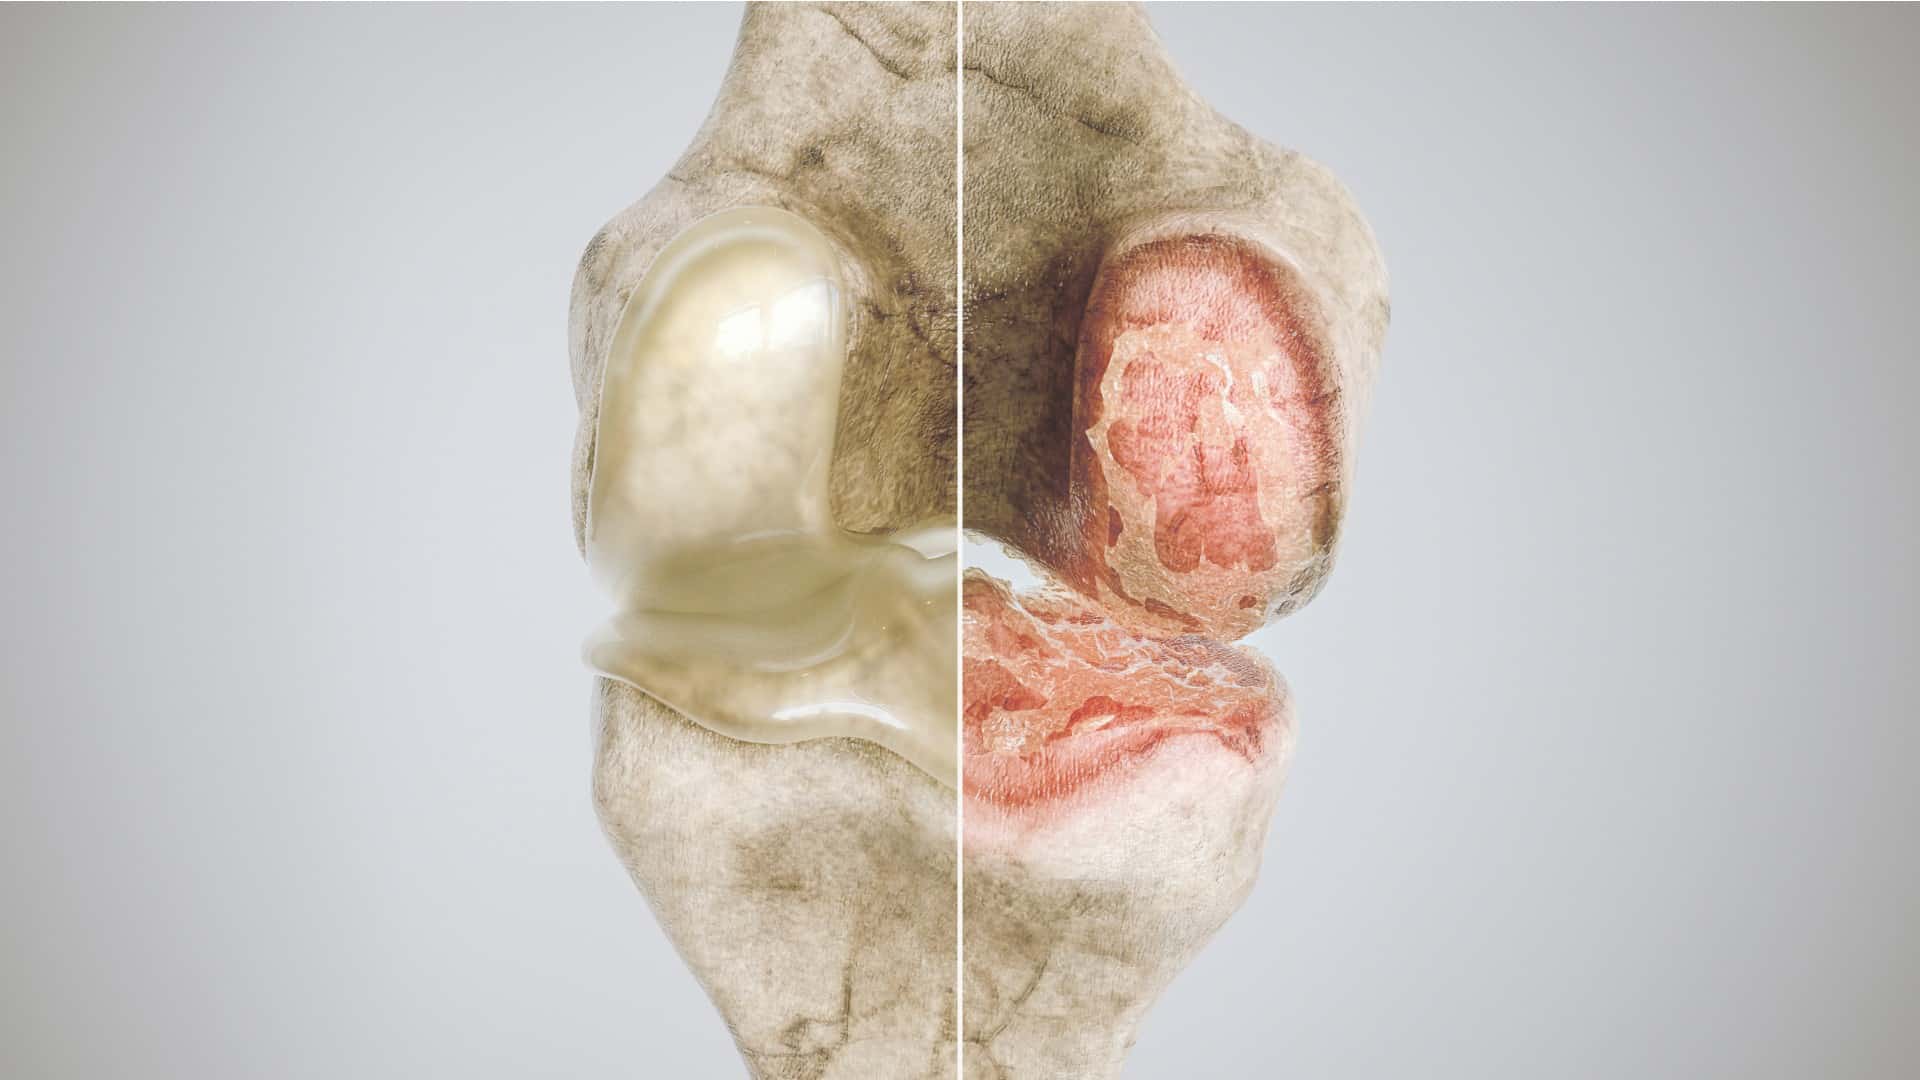 a normal knee vs a knee suffering from osteoarthritis